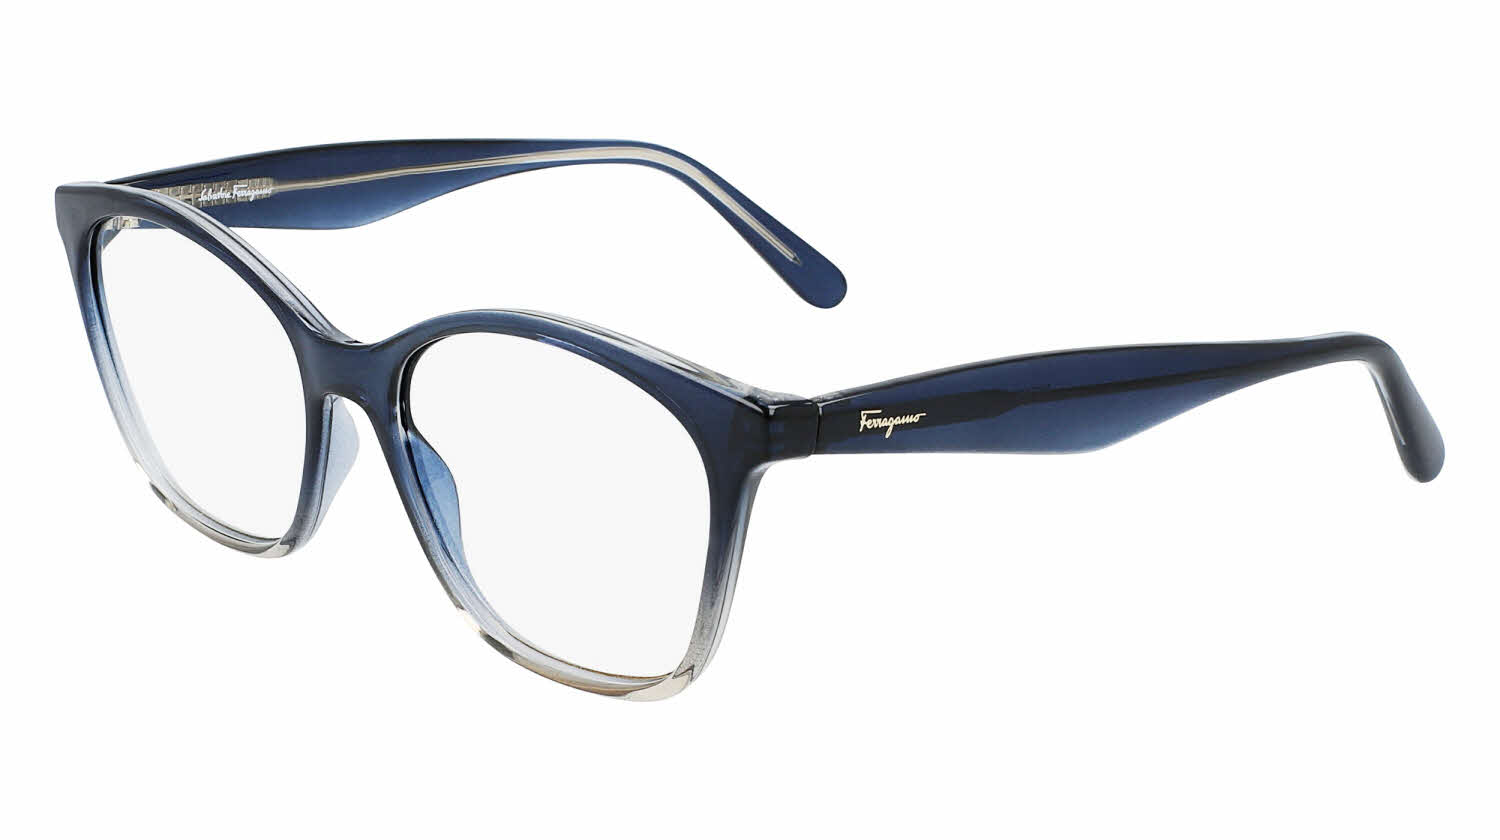 Salvatore Ferragamo SF2873 Eyeglasses